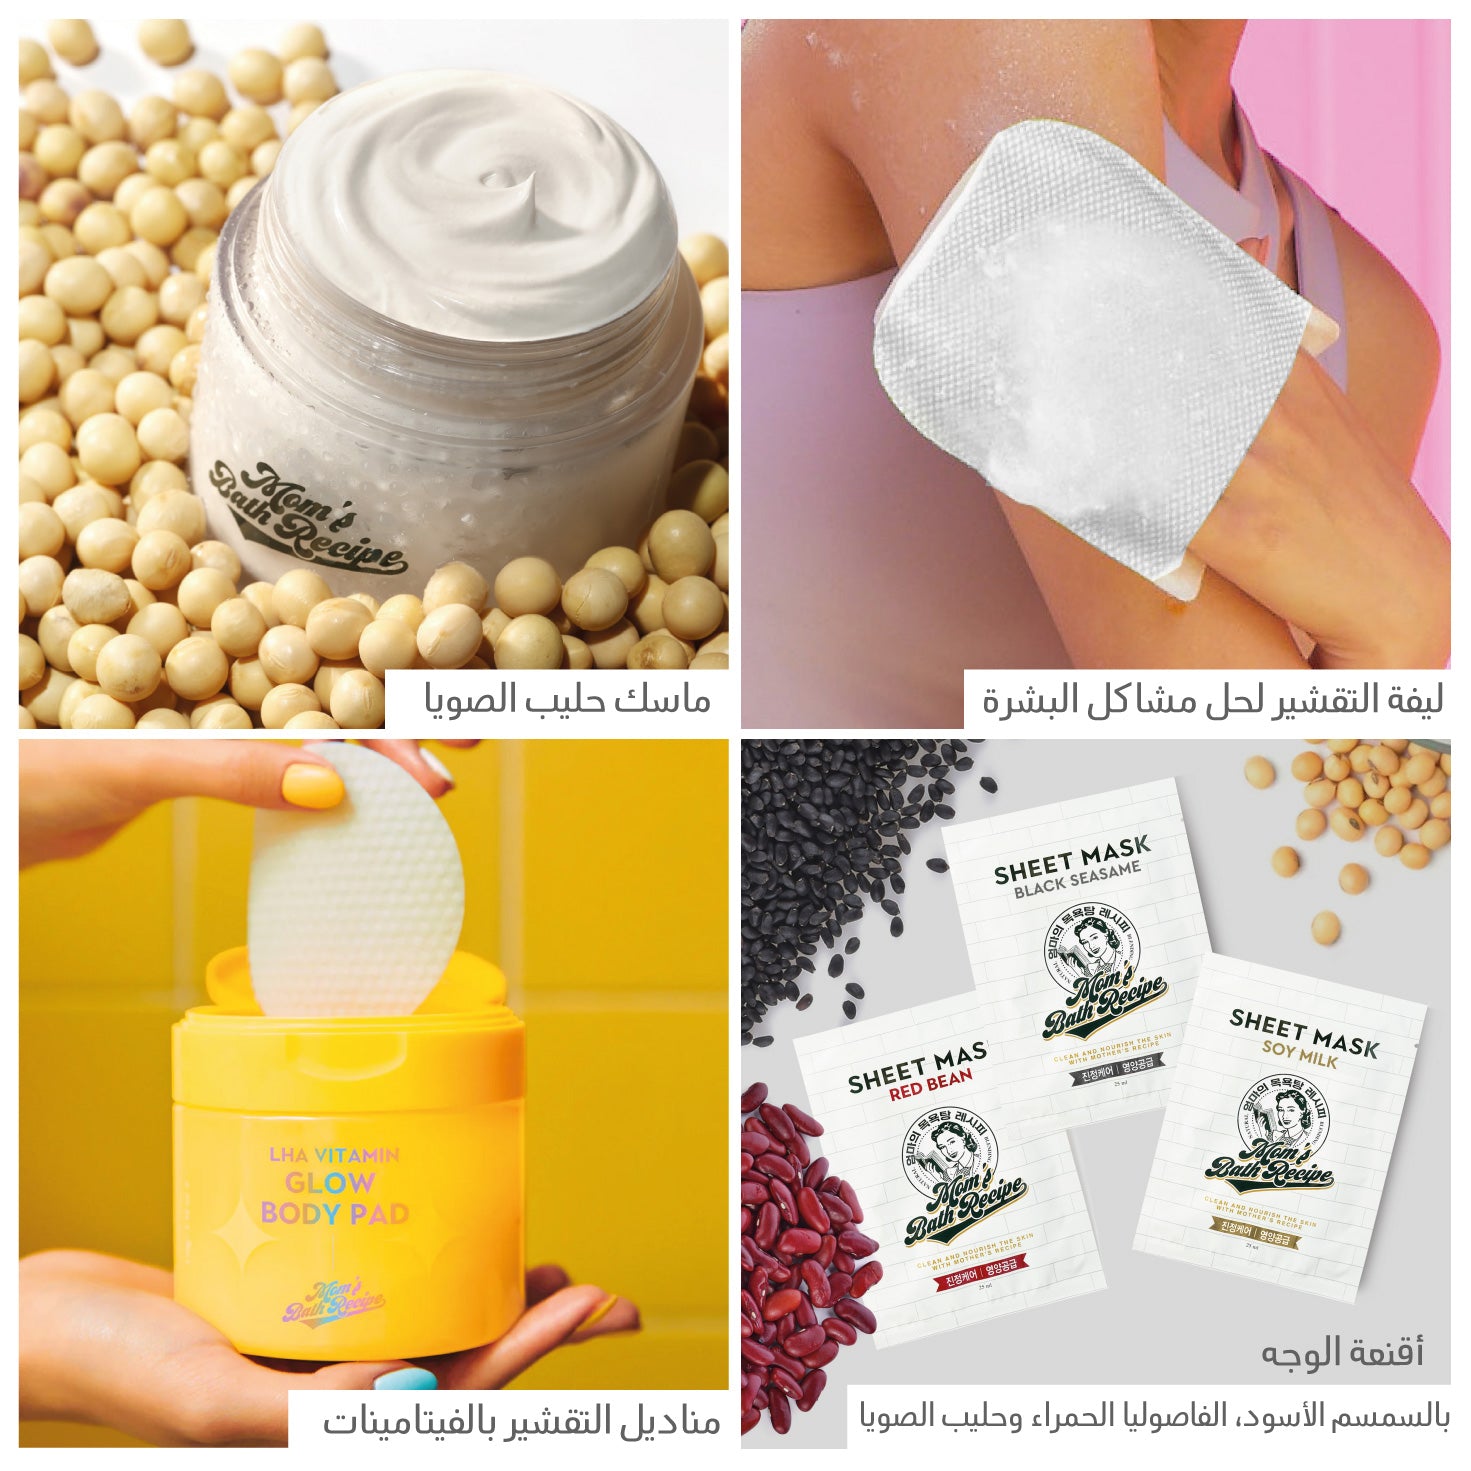 Moms Bath Skin Impurities & Hydration Package